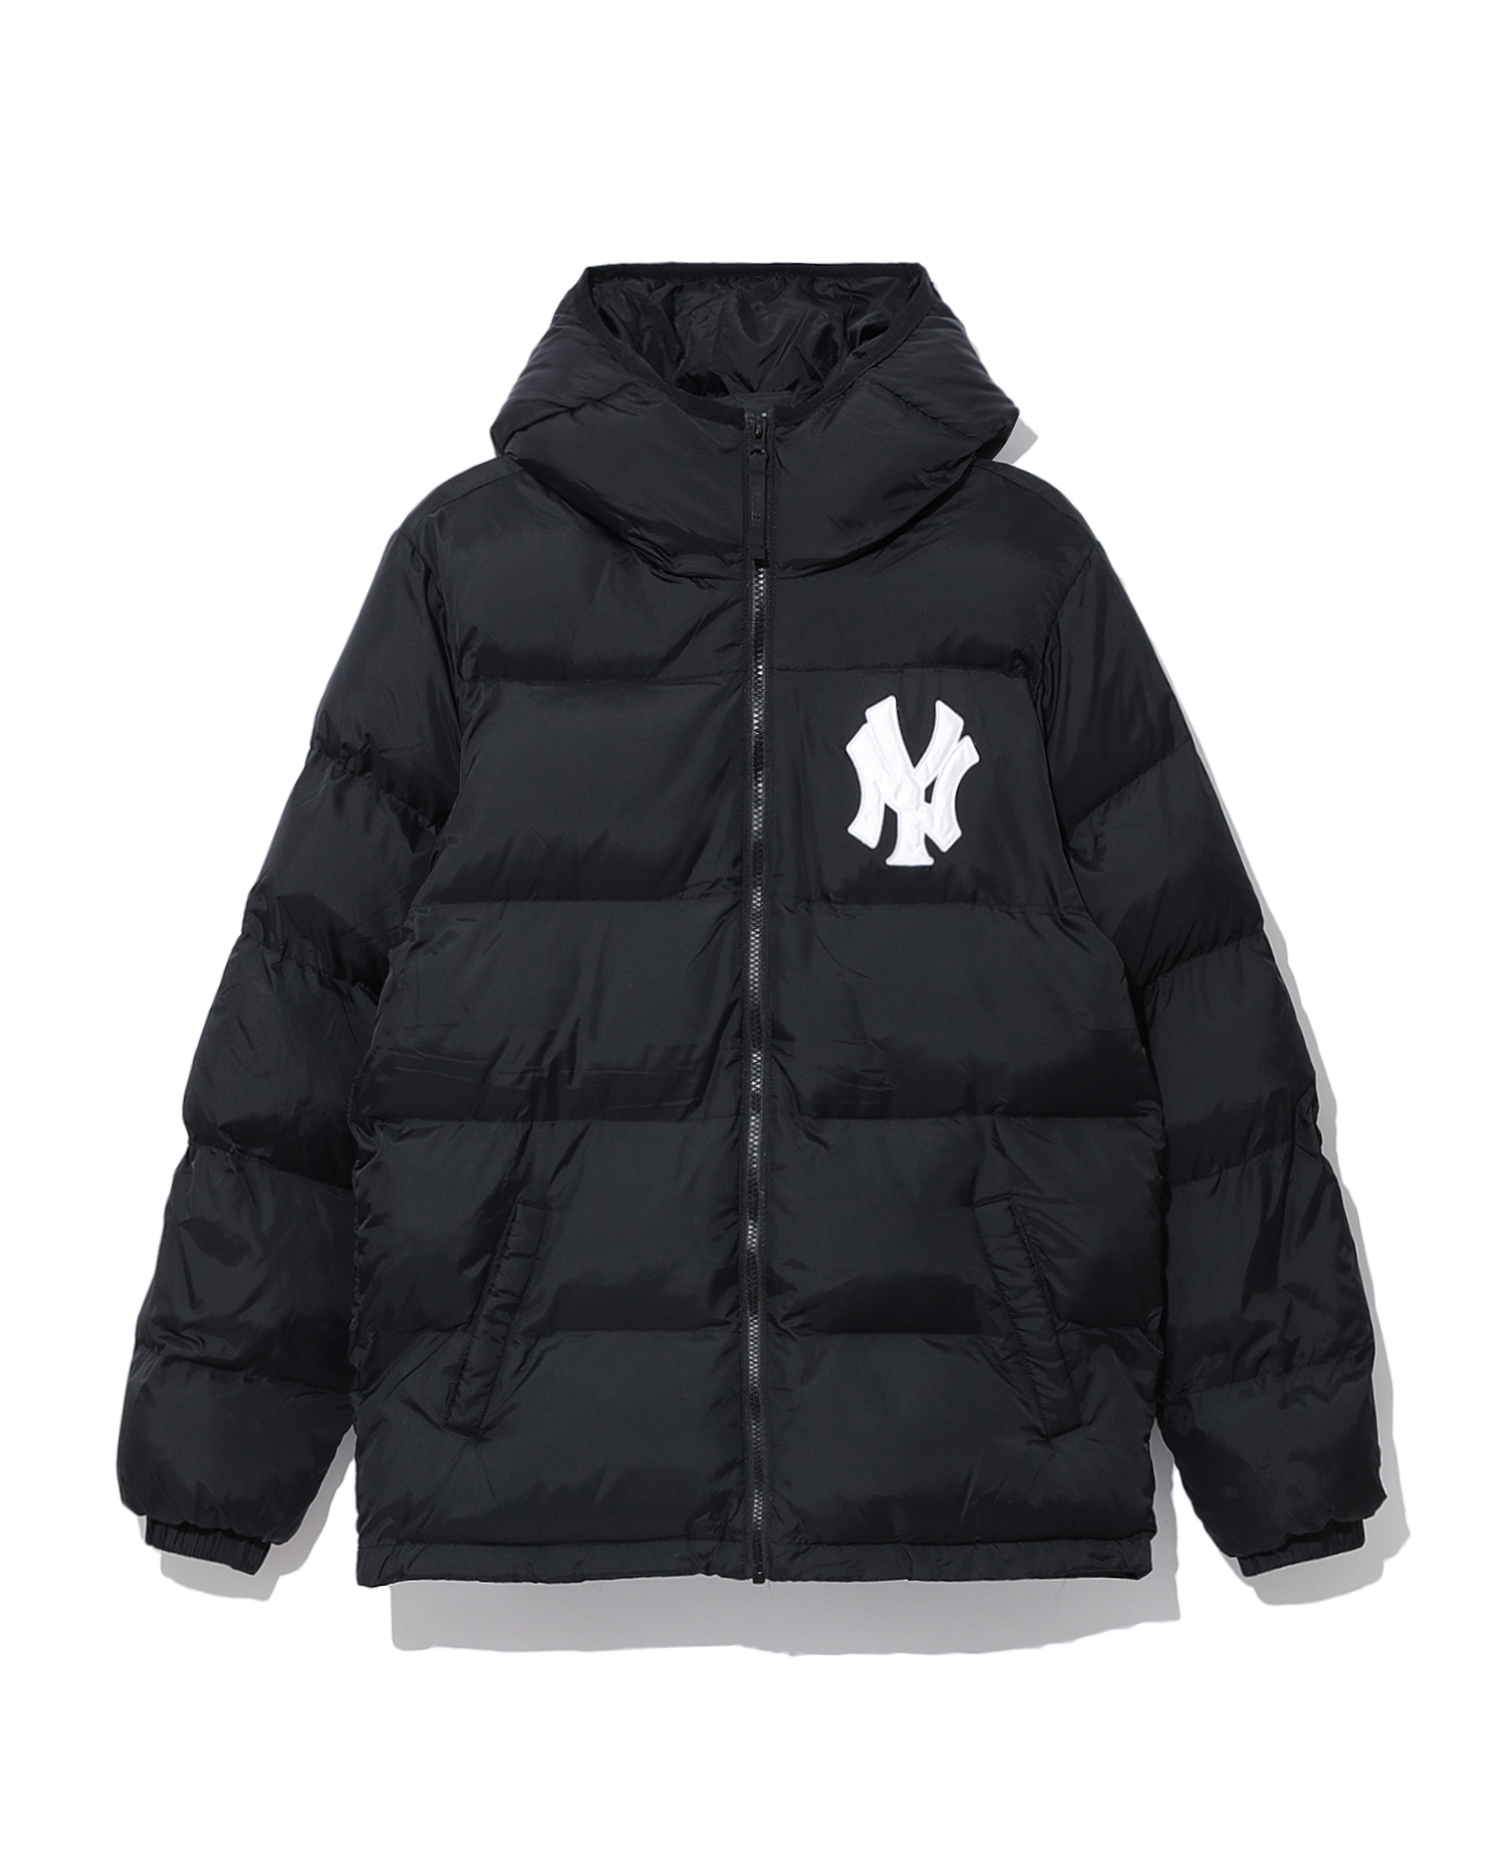 New York Yankees MLB Genuine Vintage Winter Puffer Jacket Hooded Size XL   eBay